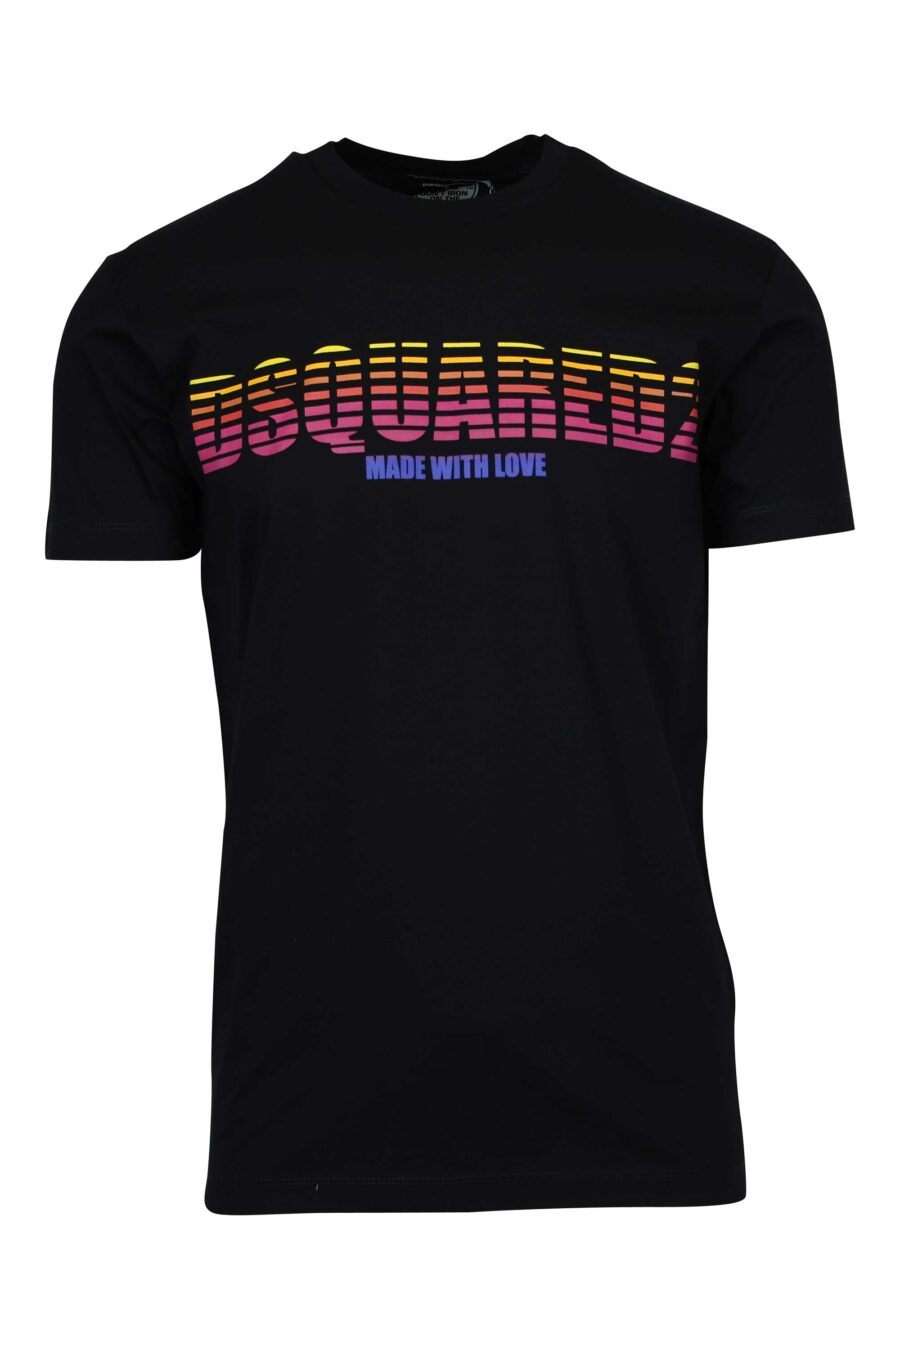 Schwarzes T-Shirt mit mehrfarbigem Retro-Maxilogo - 8054148447502